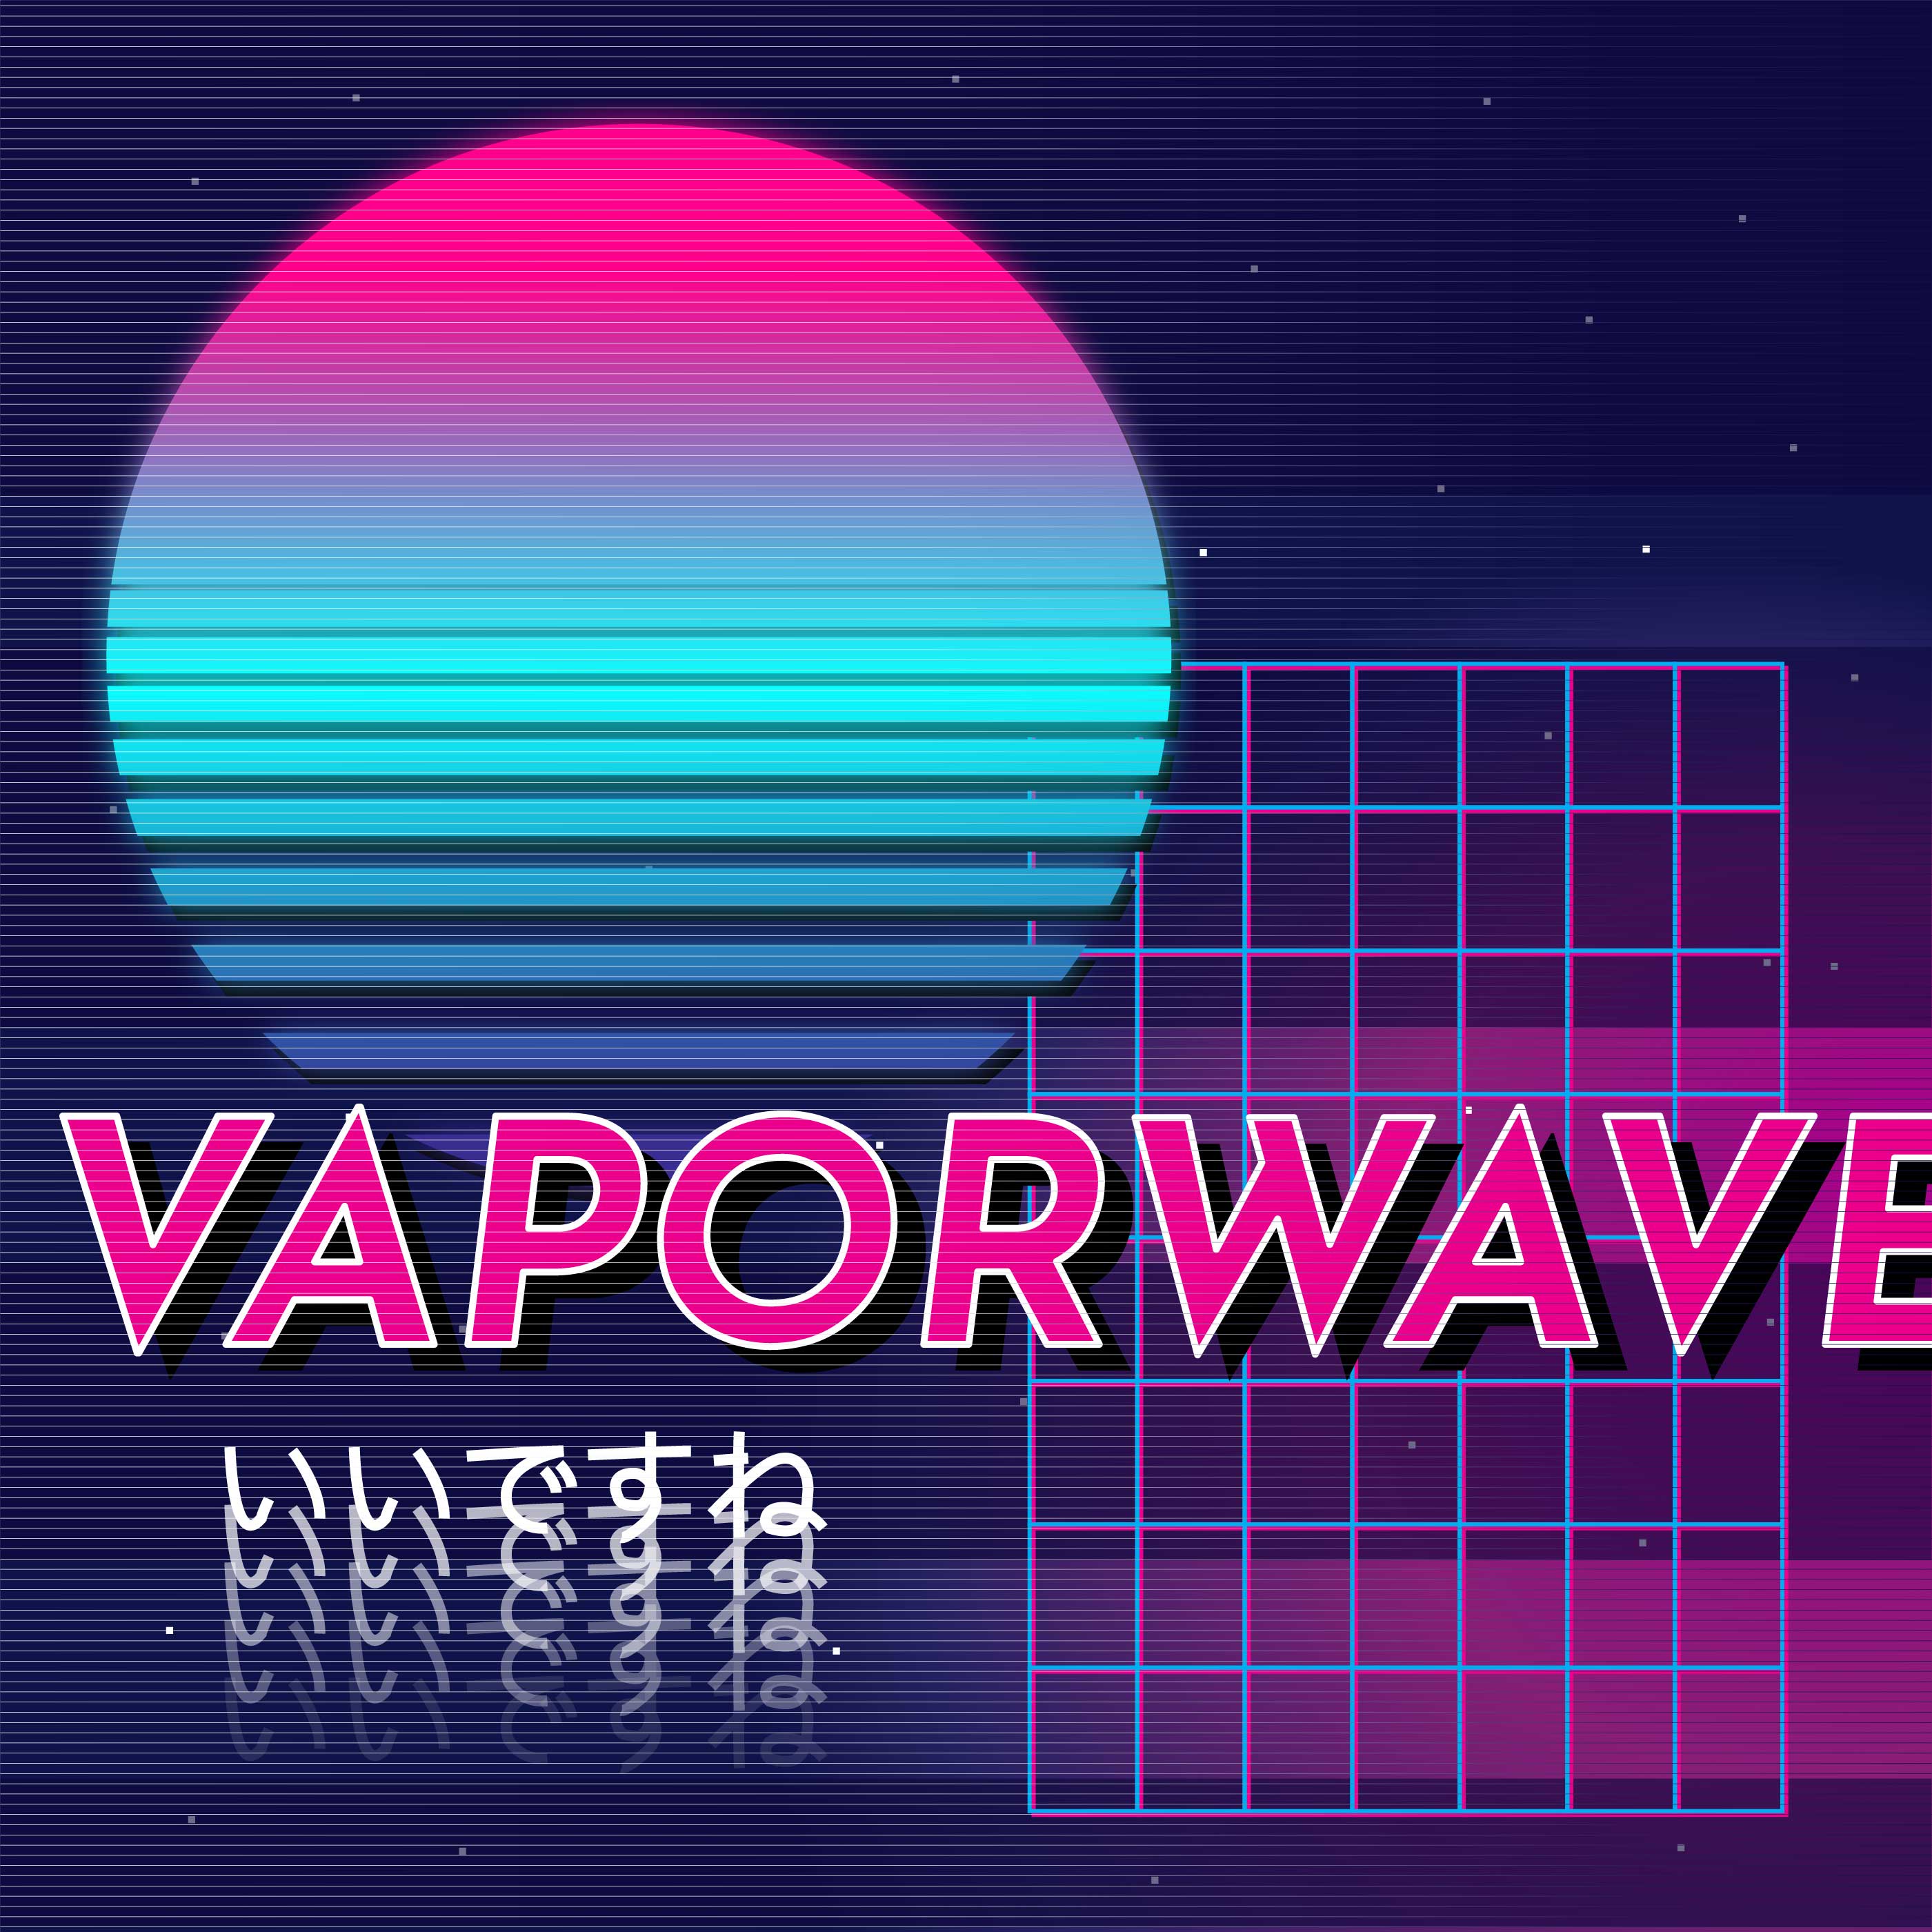 Vaporwave Background Download Free Vectors Clipart Graphics